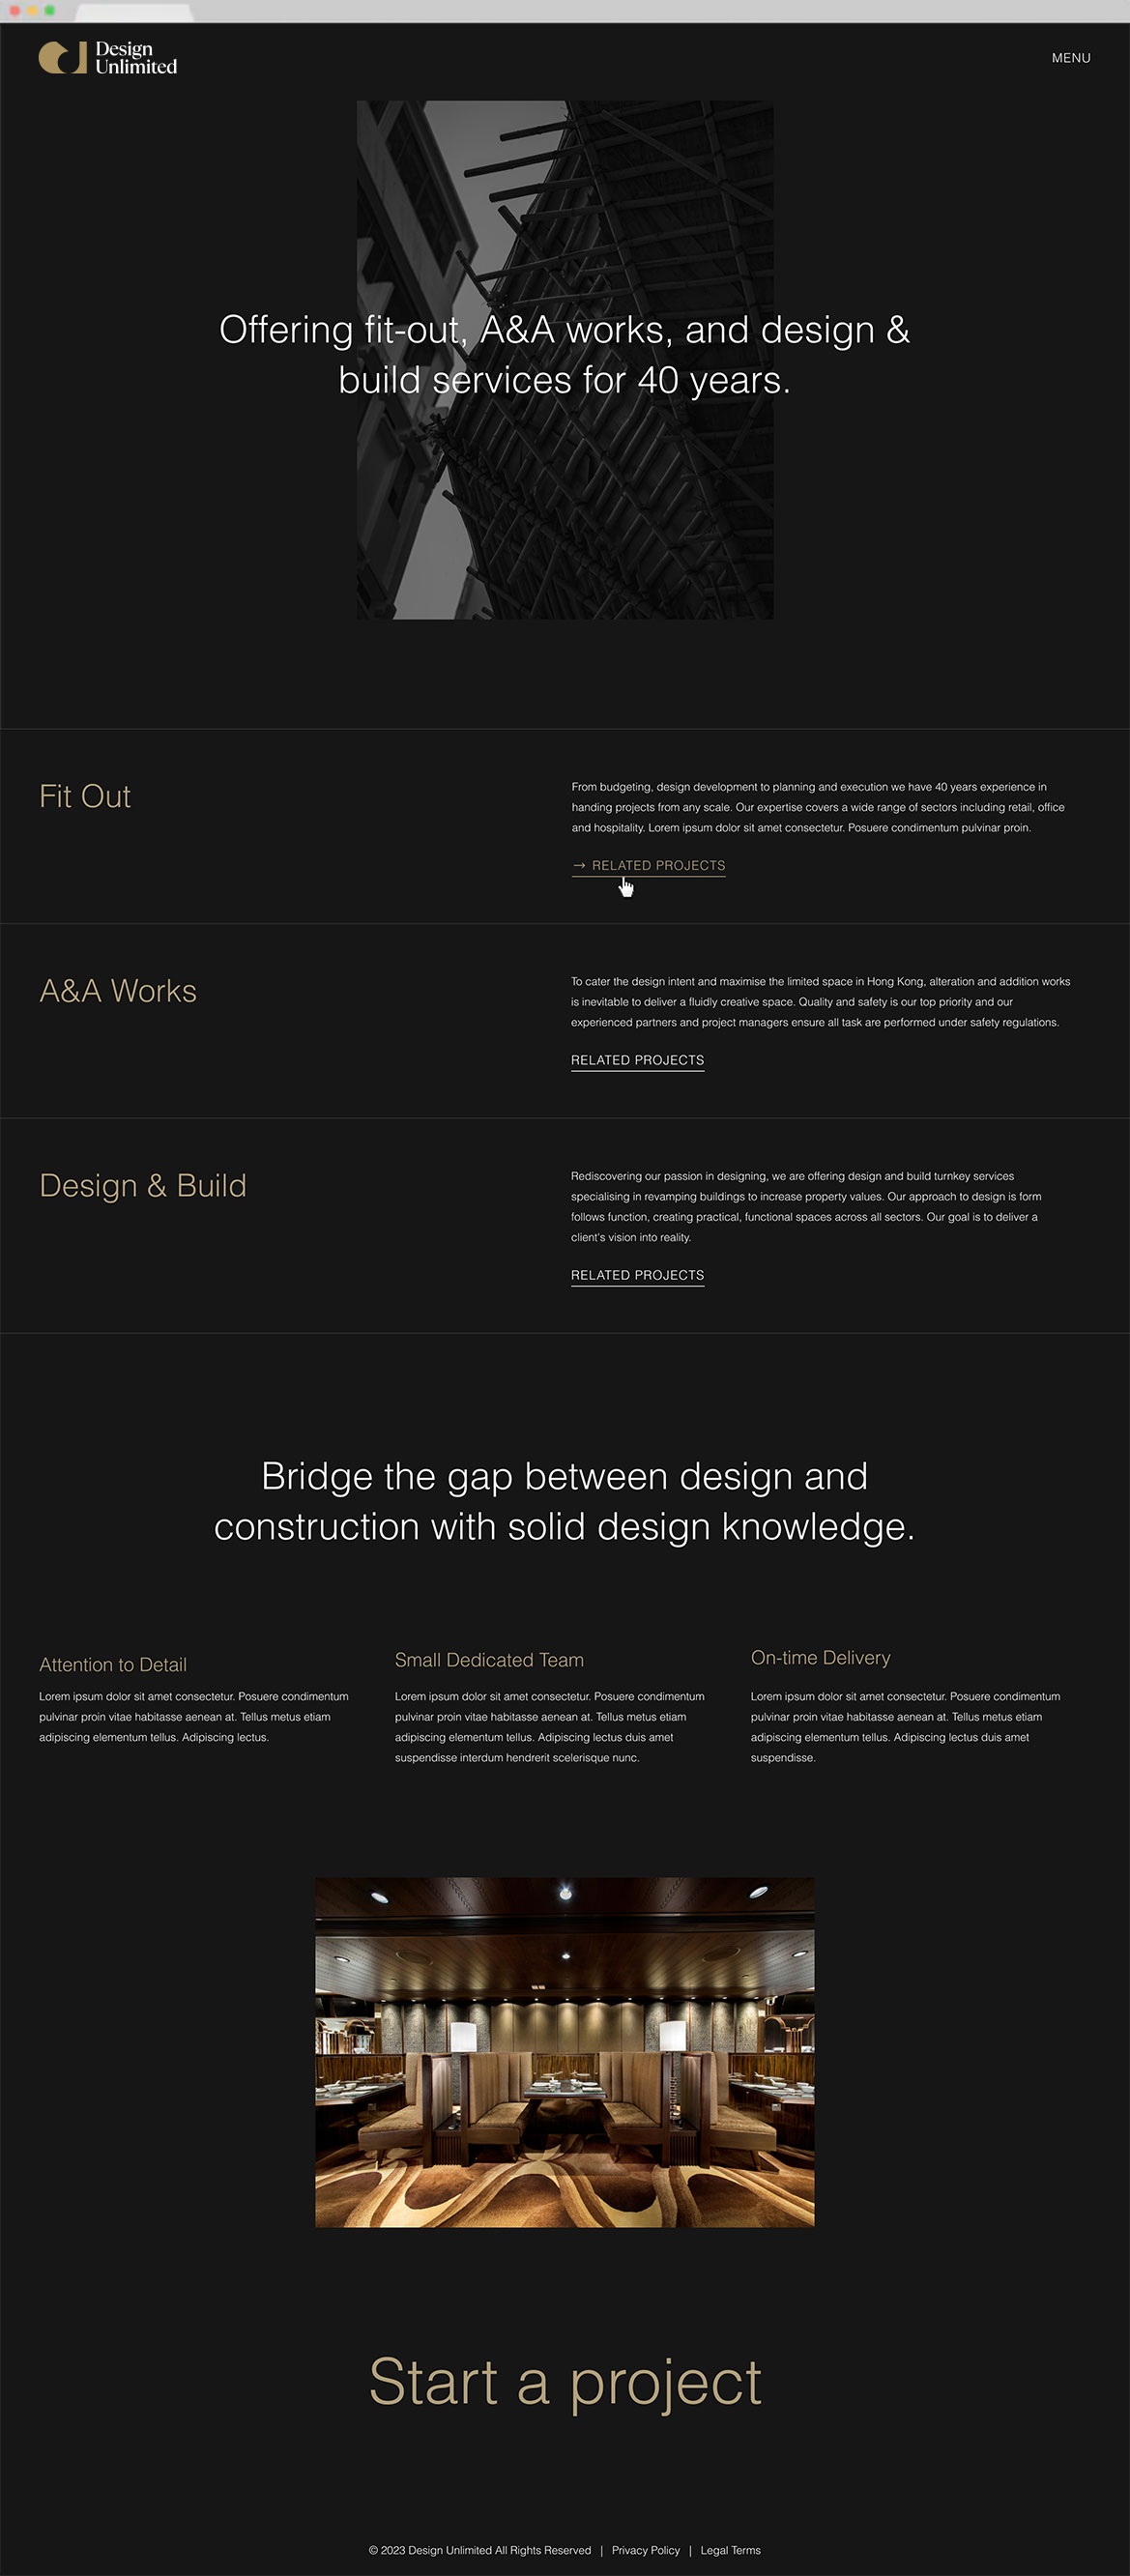 web design agency singapore Design Unlimited 02 - Design Unlimited